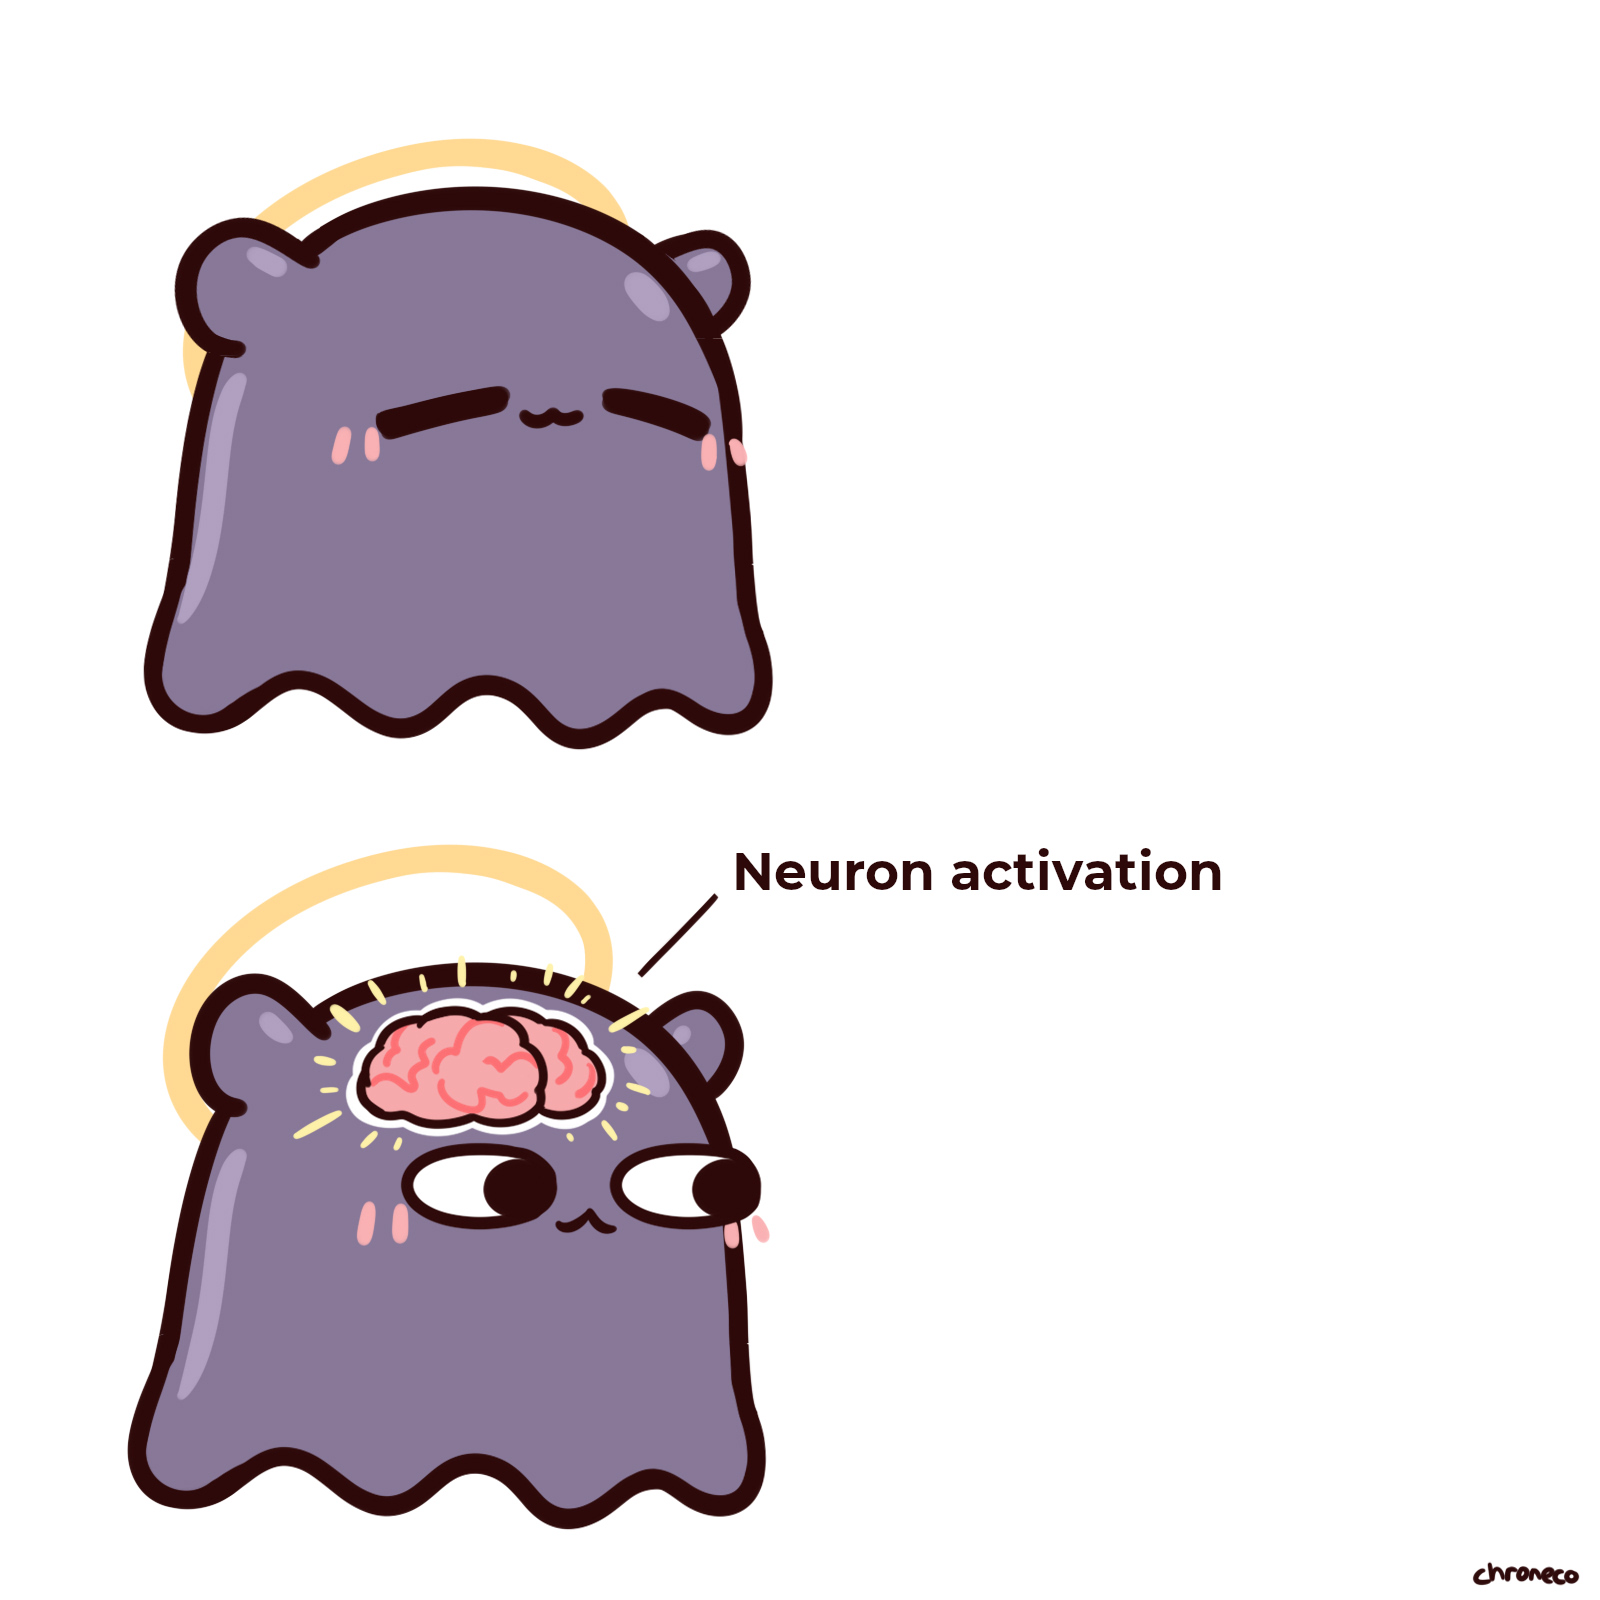 chroneco-on-twitter-neuron-activation-inart-https-t-co-lbgxlkznbk-twitter